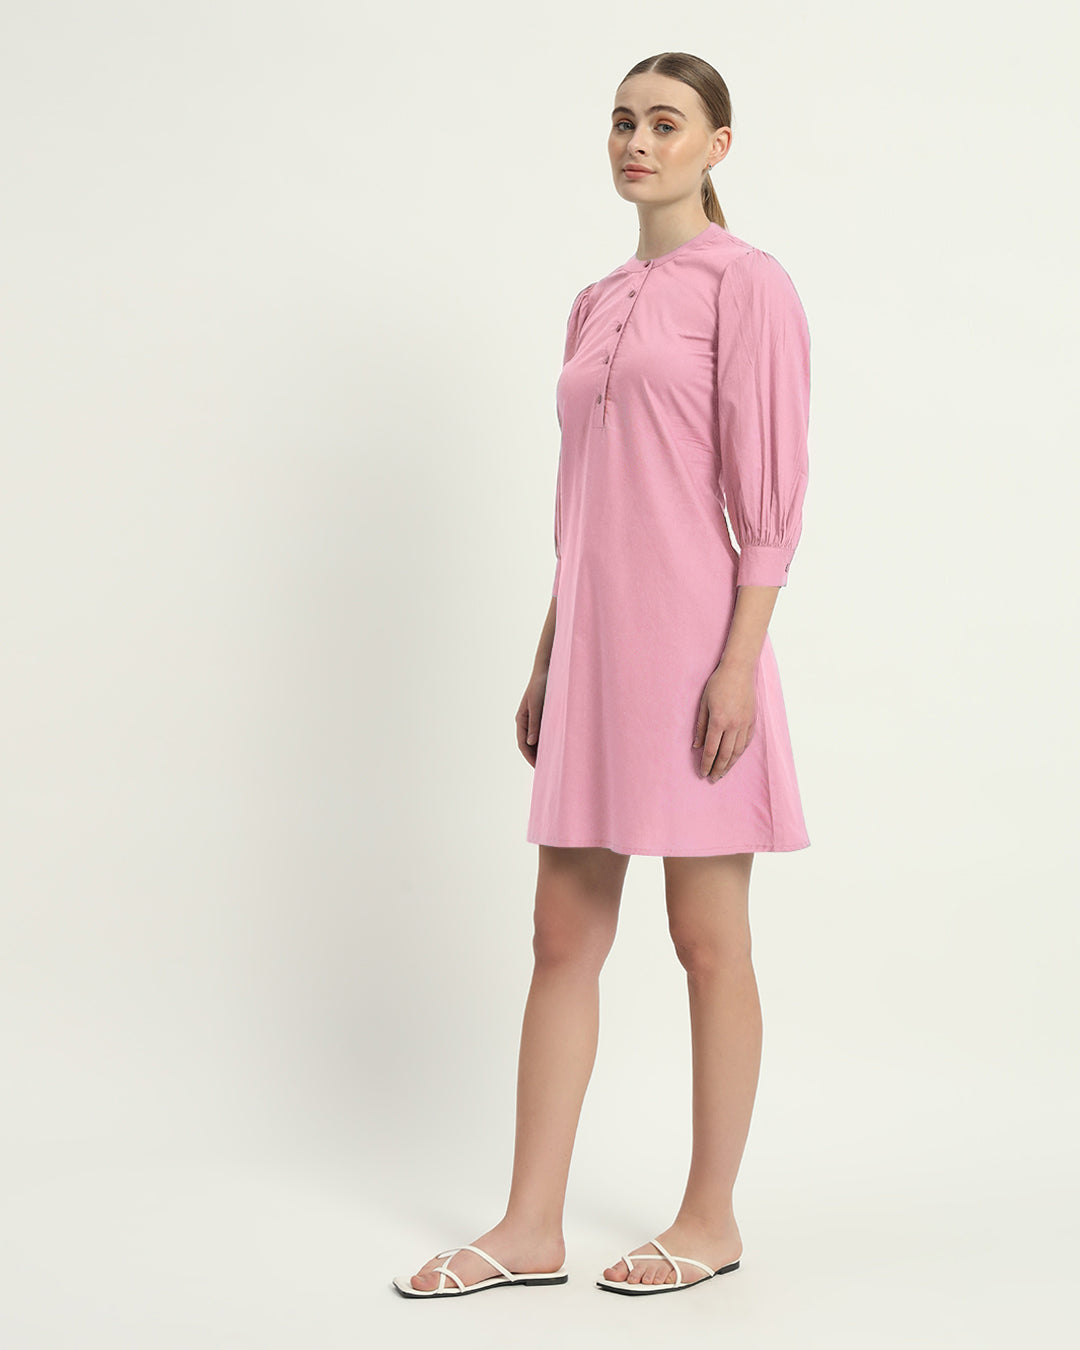 The Roslyn Fondant Pink Cotton Dress